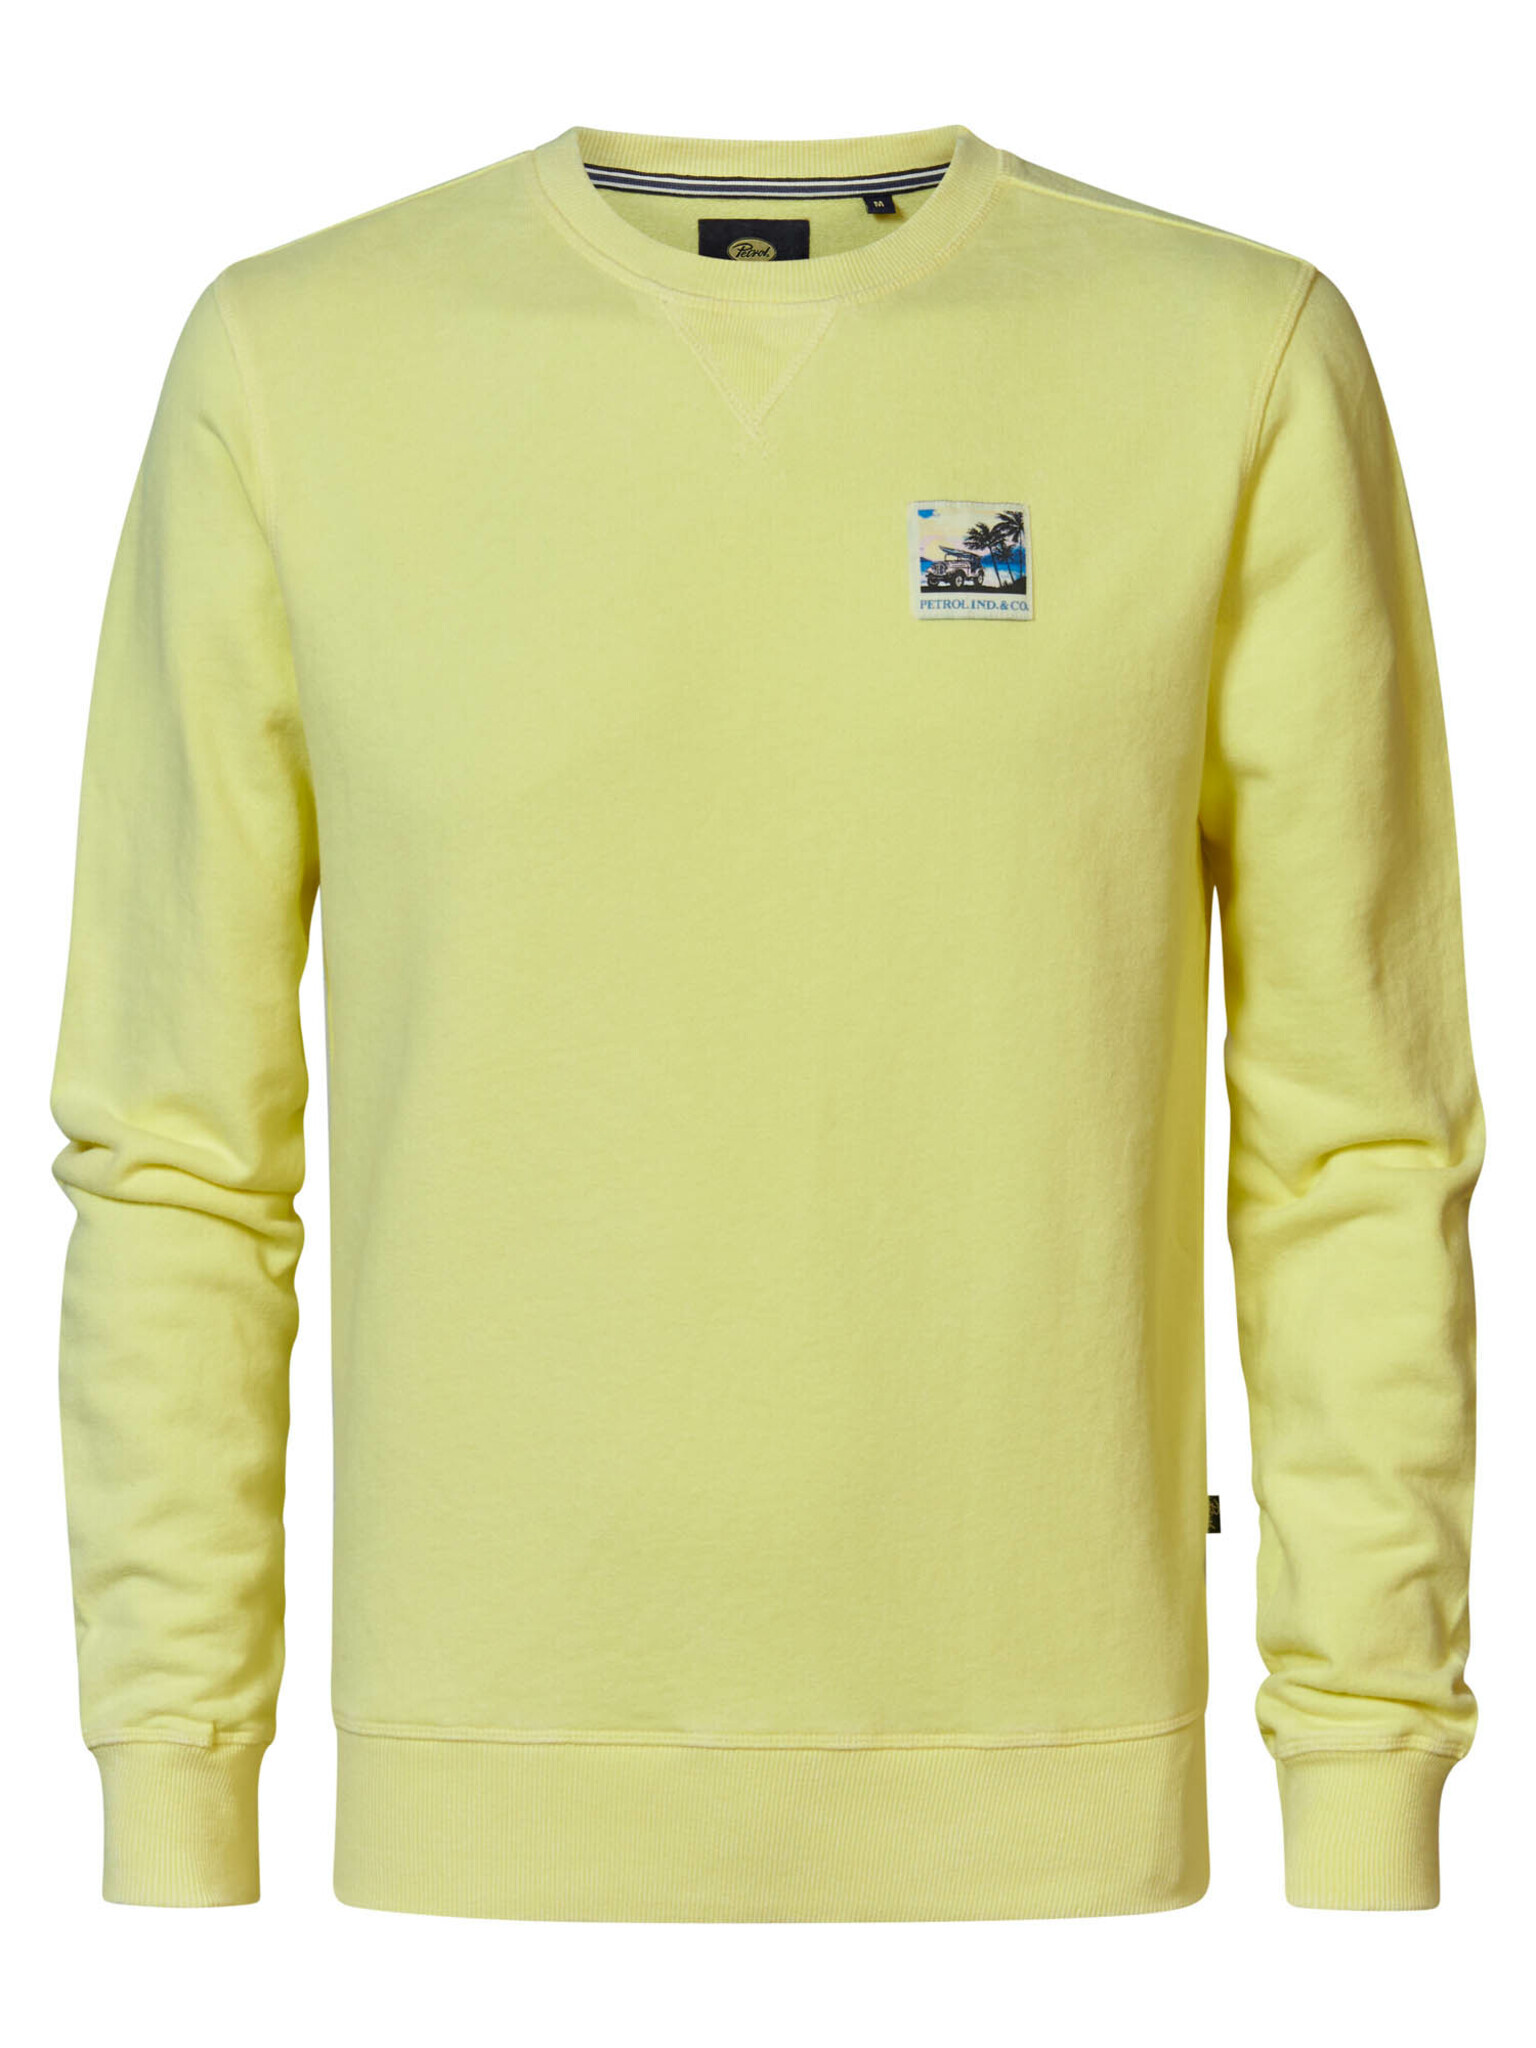 Sweater Lemon Yellow – PETROL